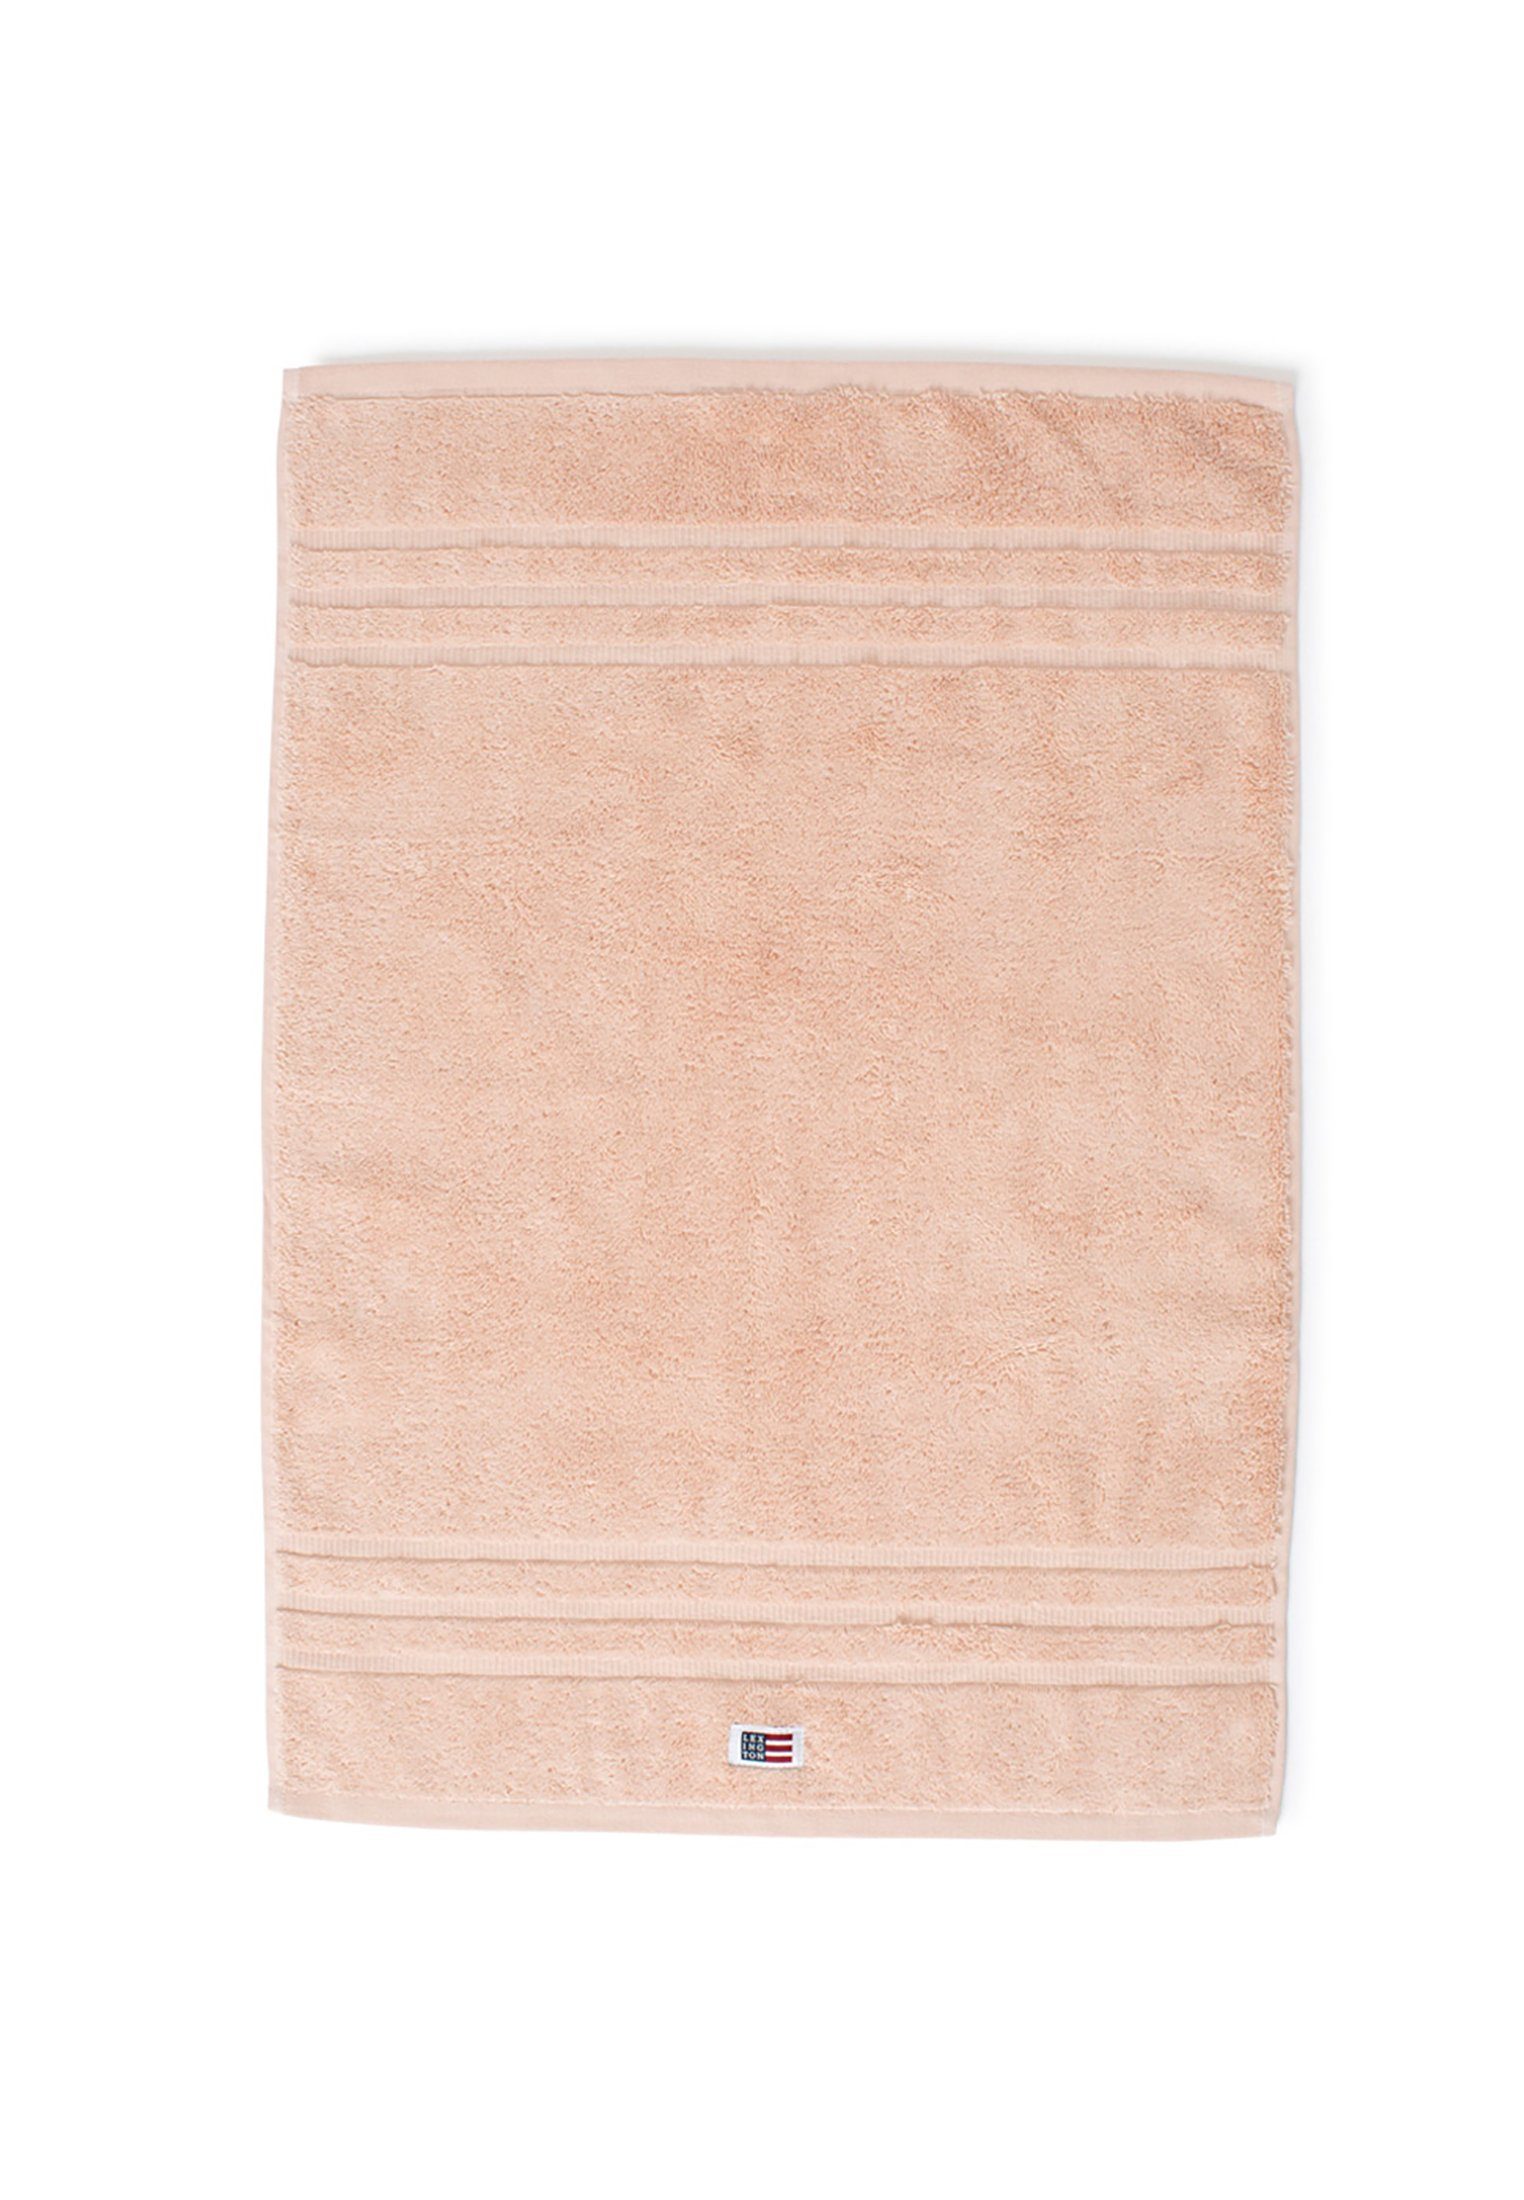 Lexington rose Towel Handtuch Original dust